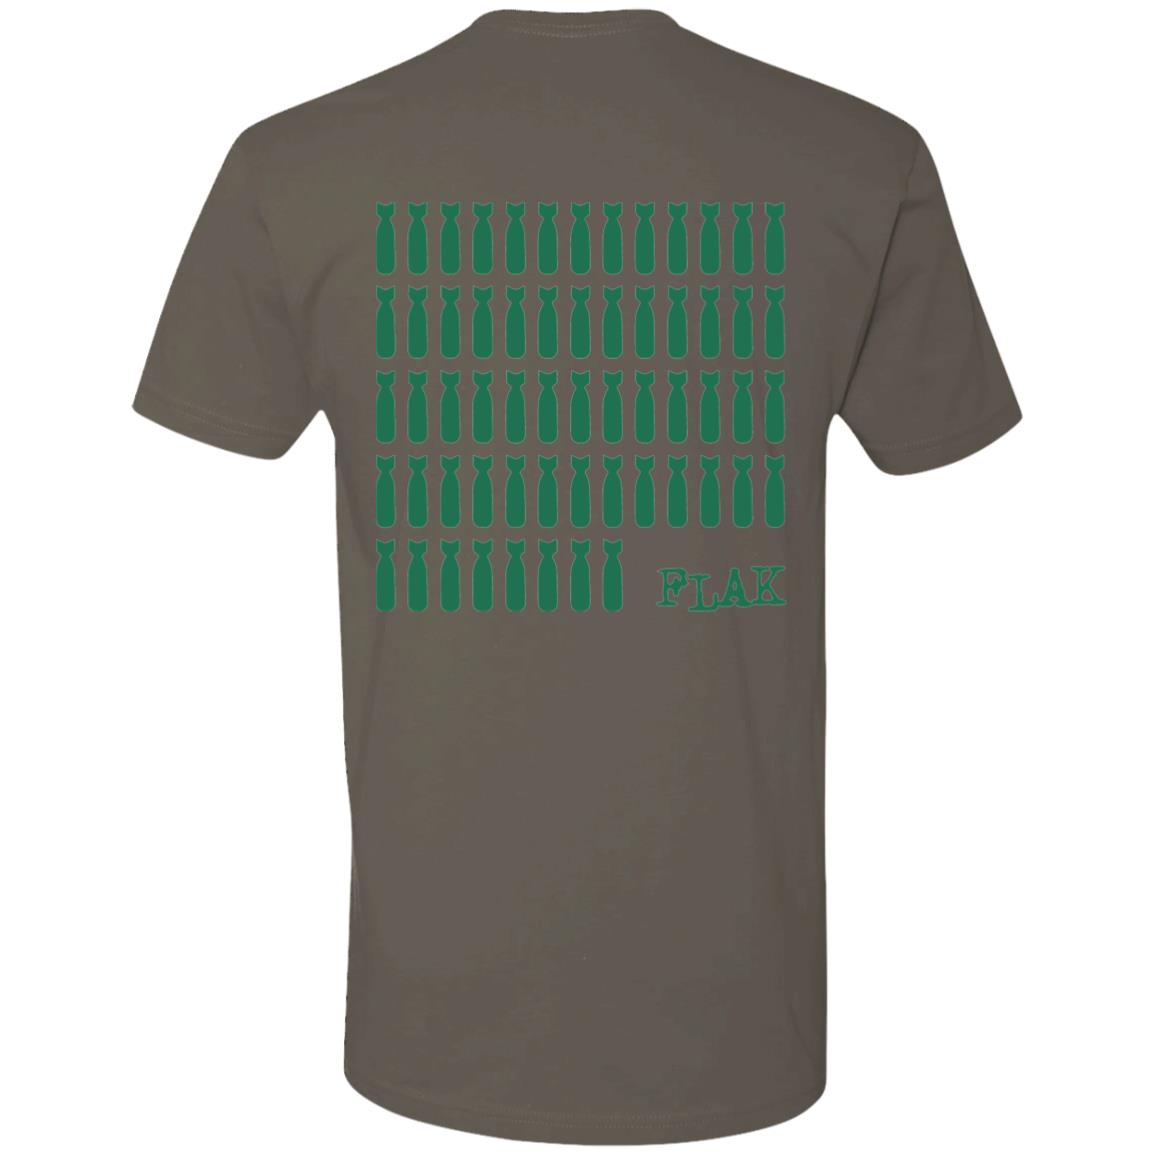 The Something Brothers "FLAK" Front/Back Design Premium Short Sleeve T-Shirt